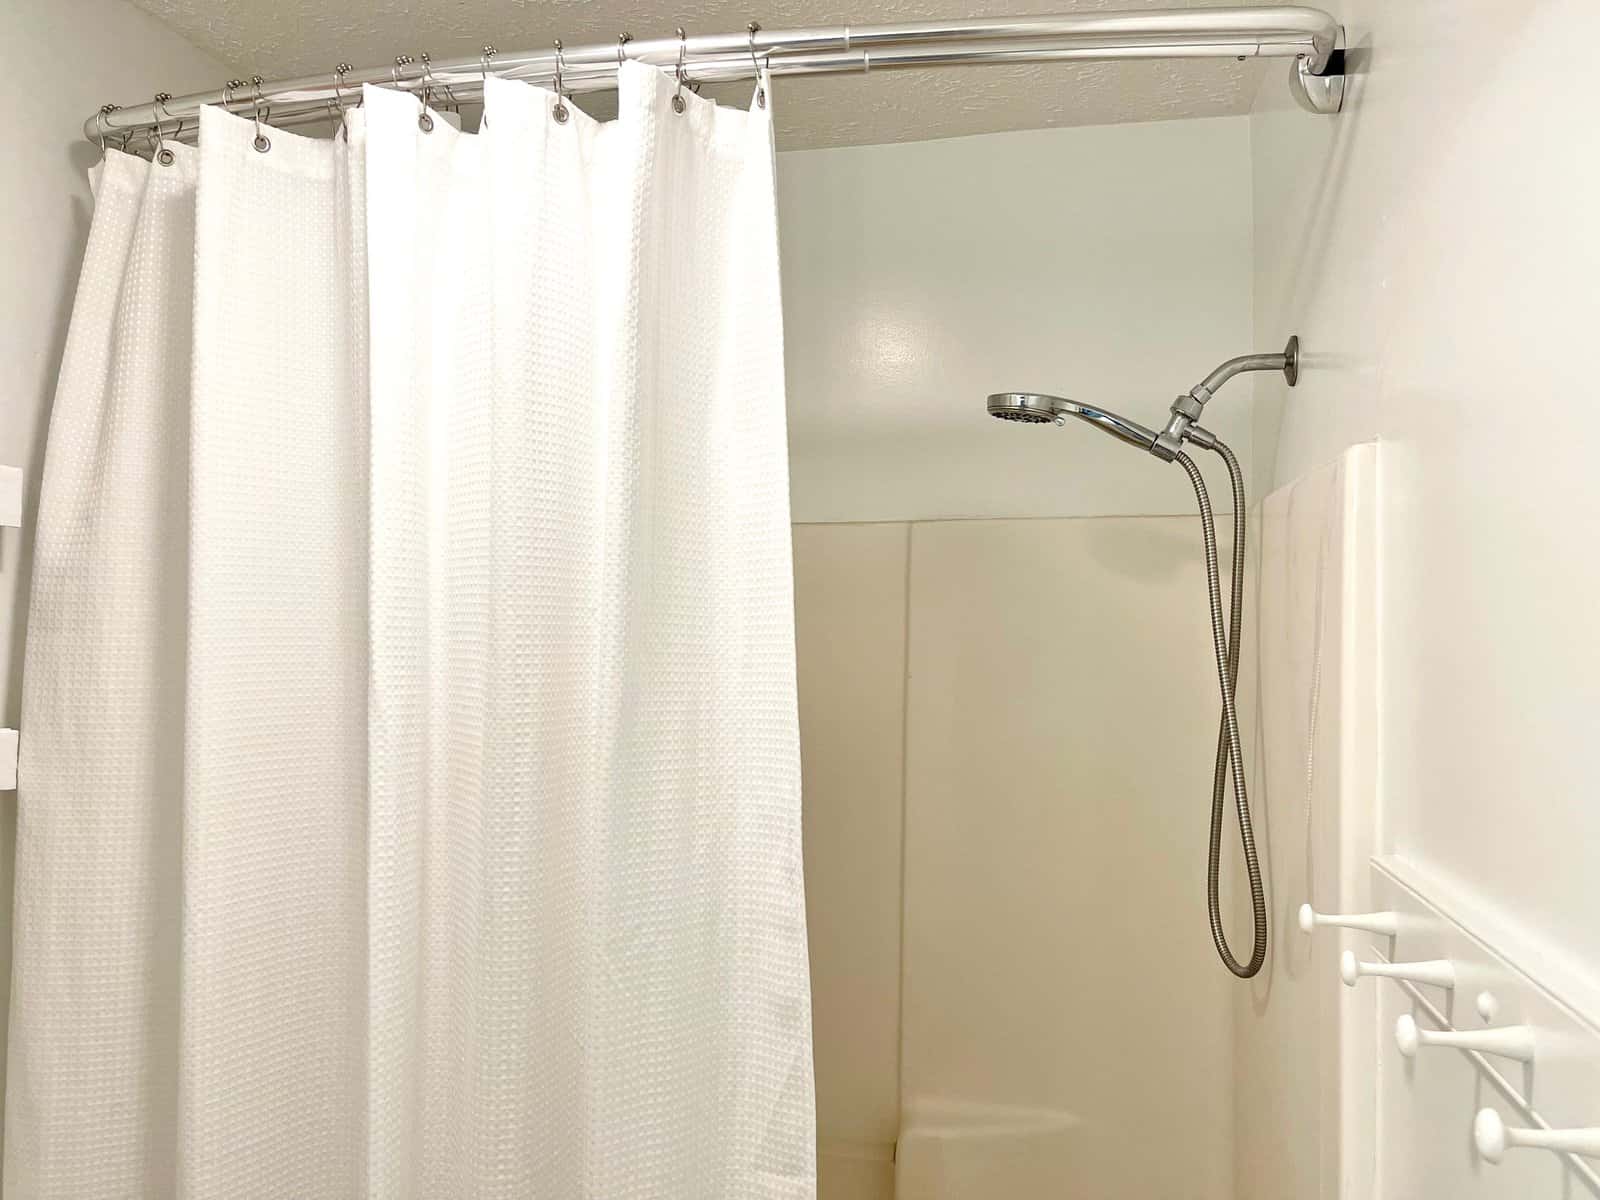 replacing shower glass door curved rod